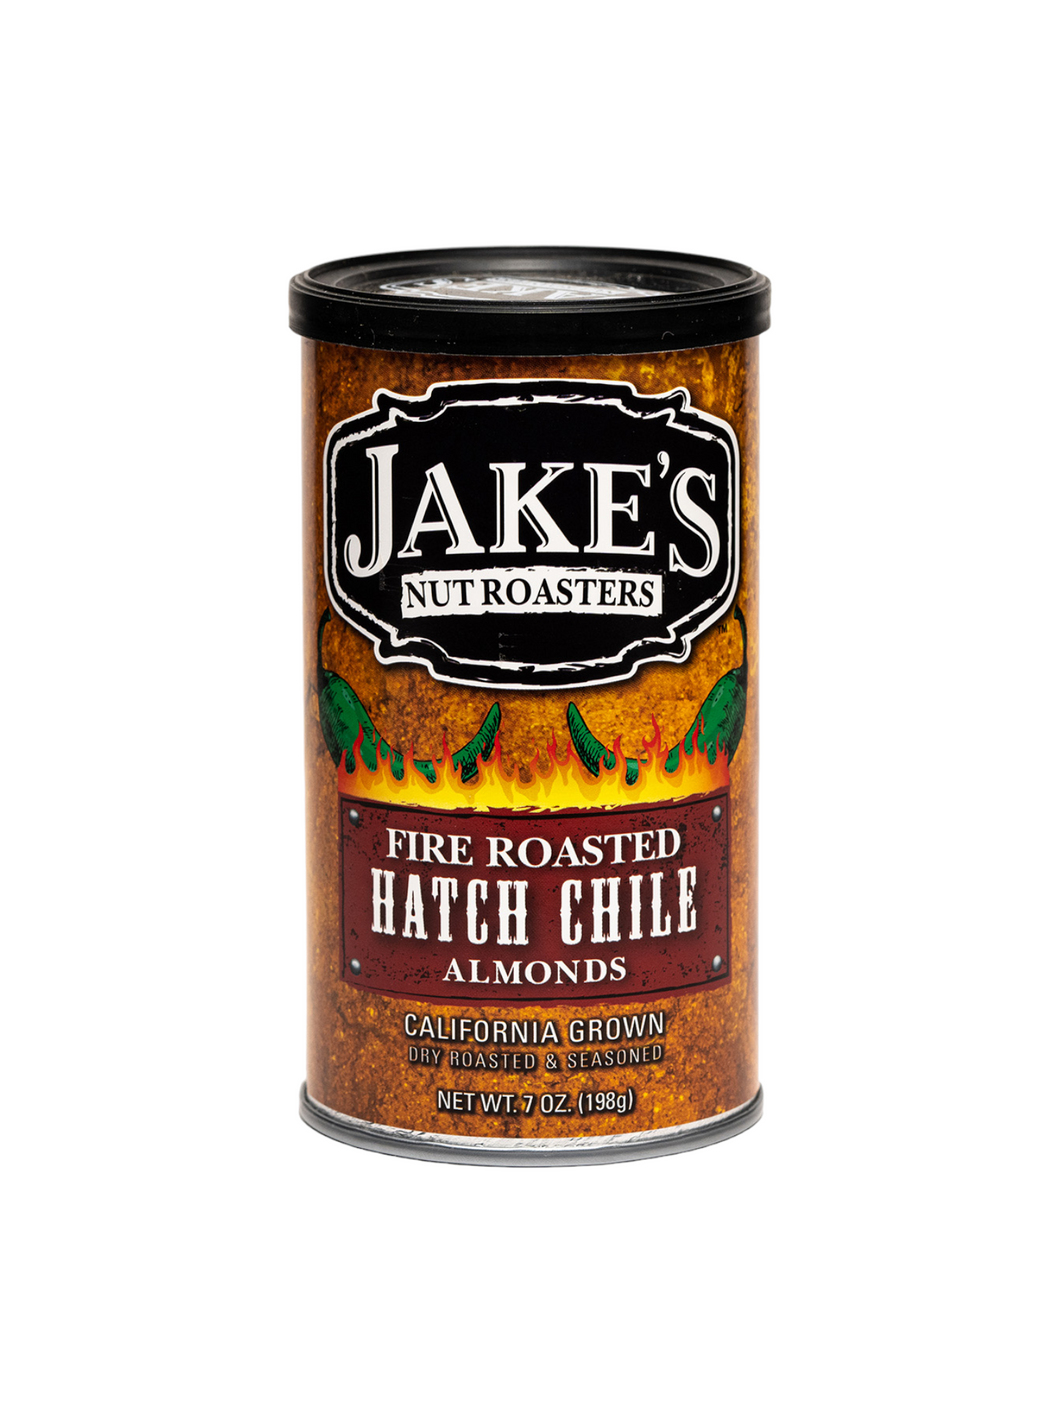 Jake's Hatch Chile Almonds